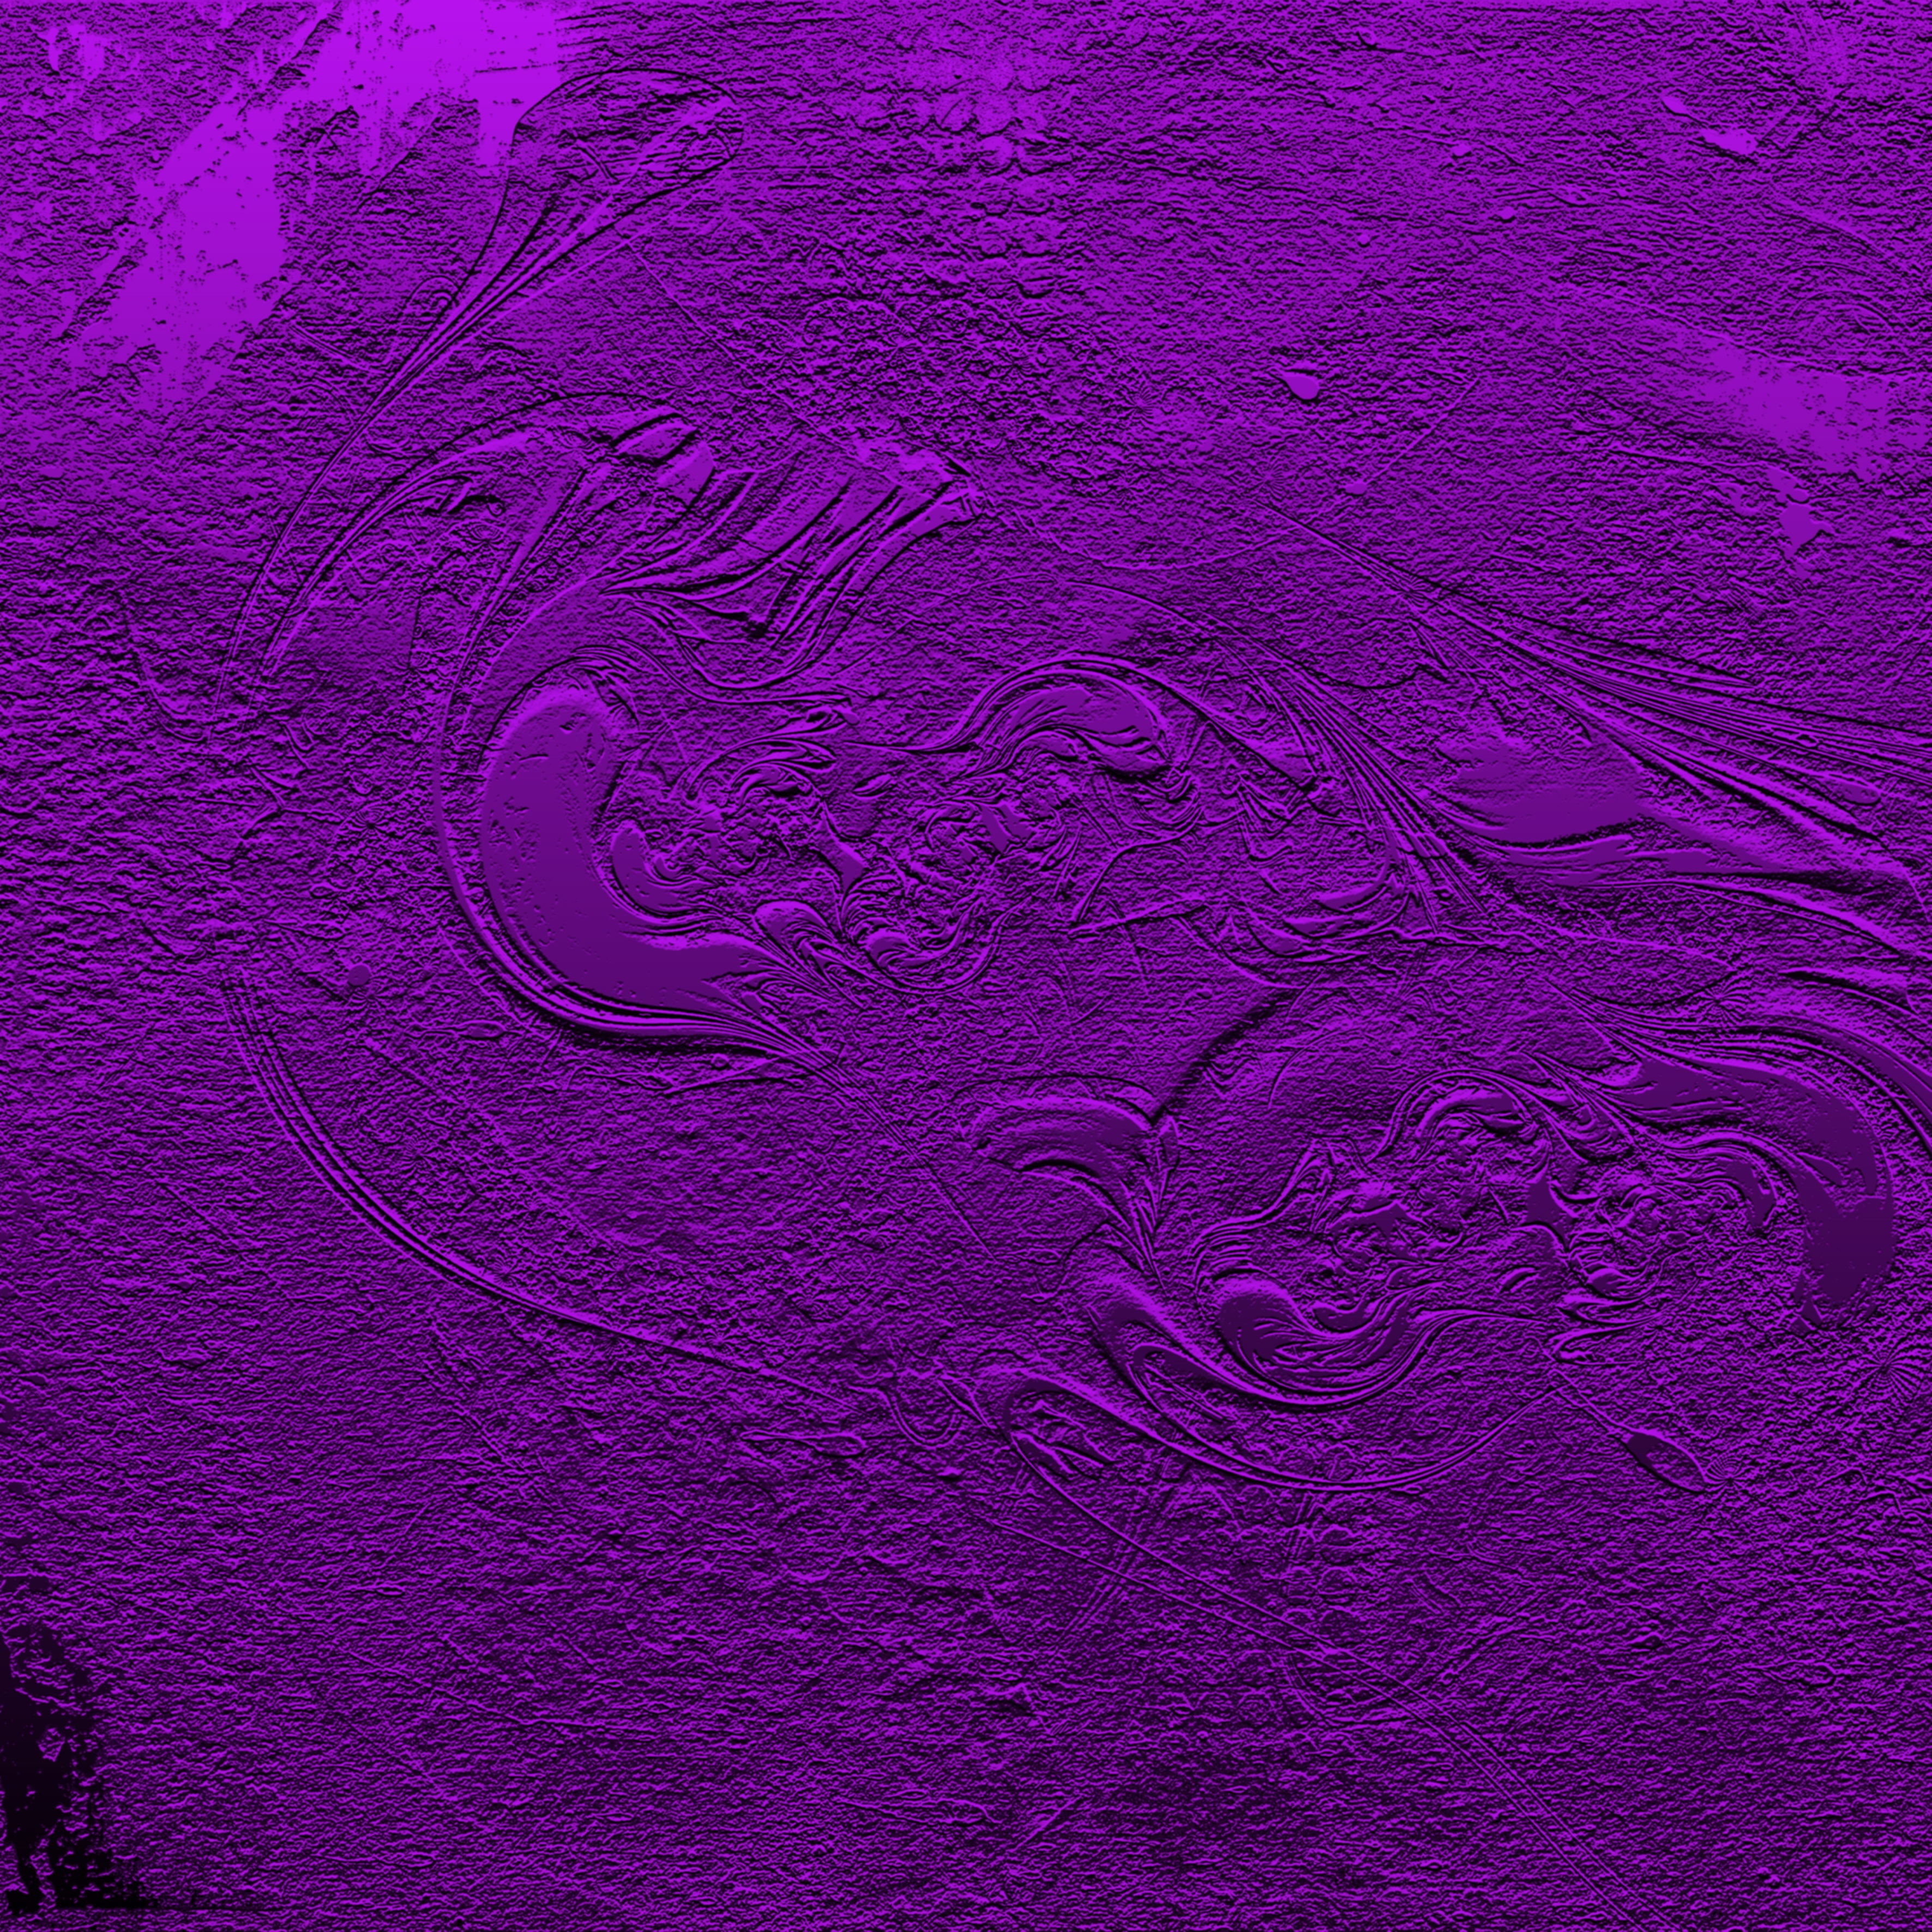 patterns, purple, textures, violet, texture, irregularities